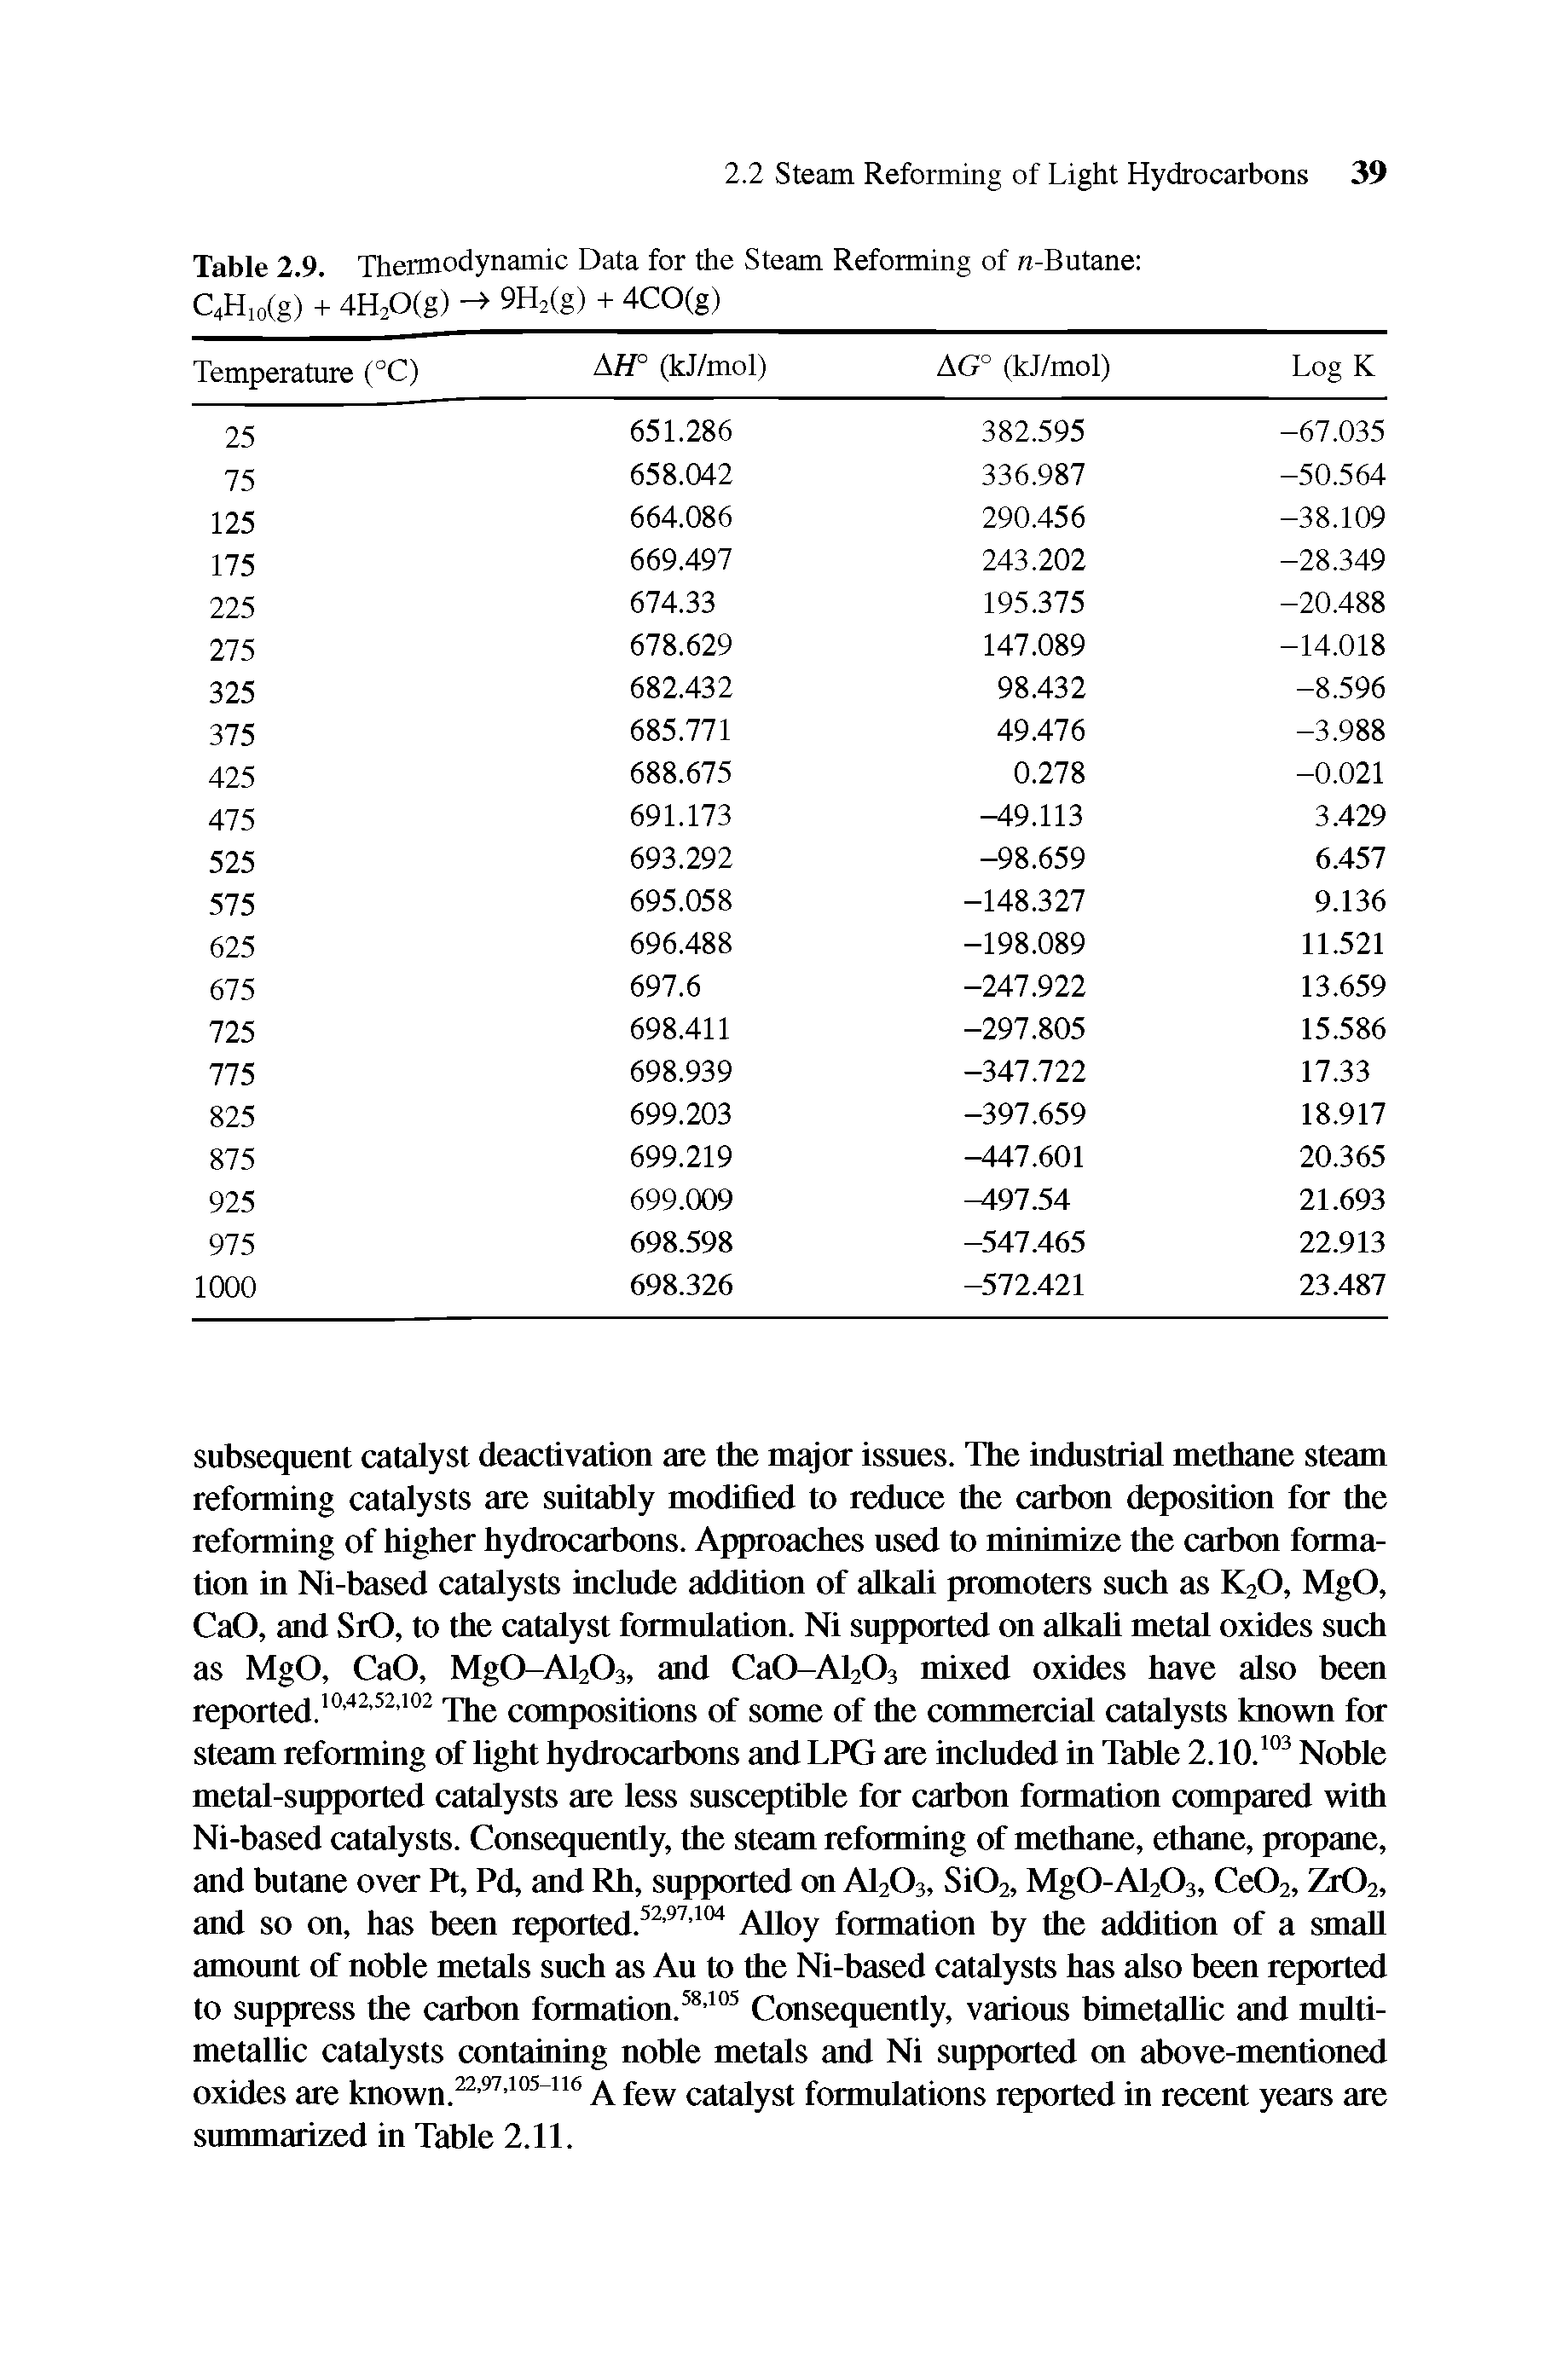 Table 2.9. Thermodynamic Data for the Steam Reforming of ra-Butane C4H10(g) + 4H20(g) 9H2(g) + 4CO(g)...